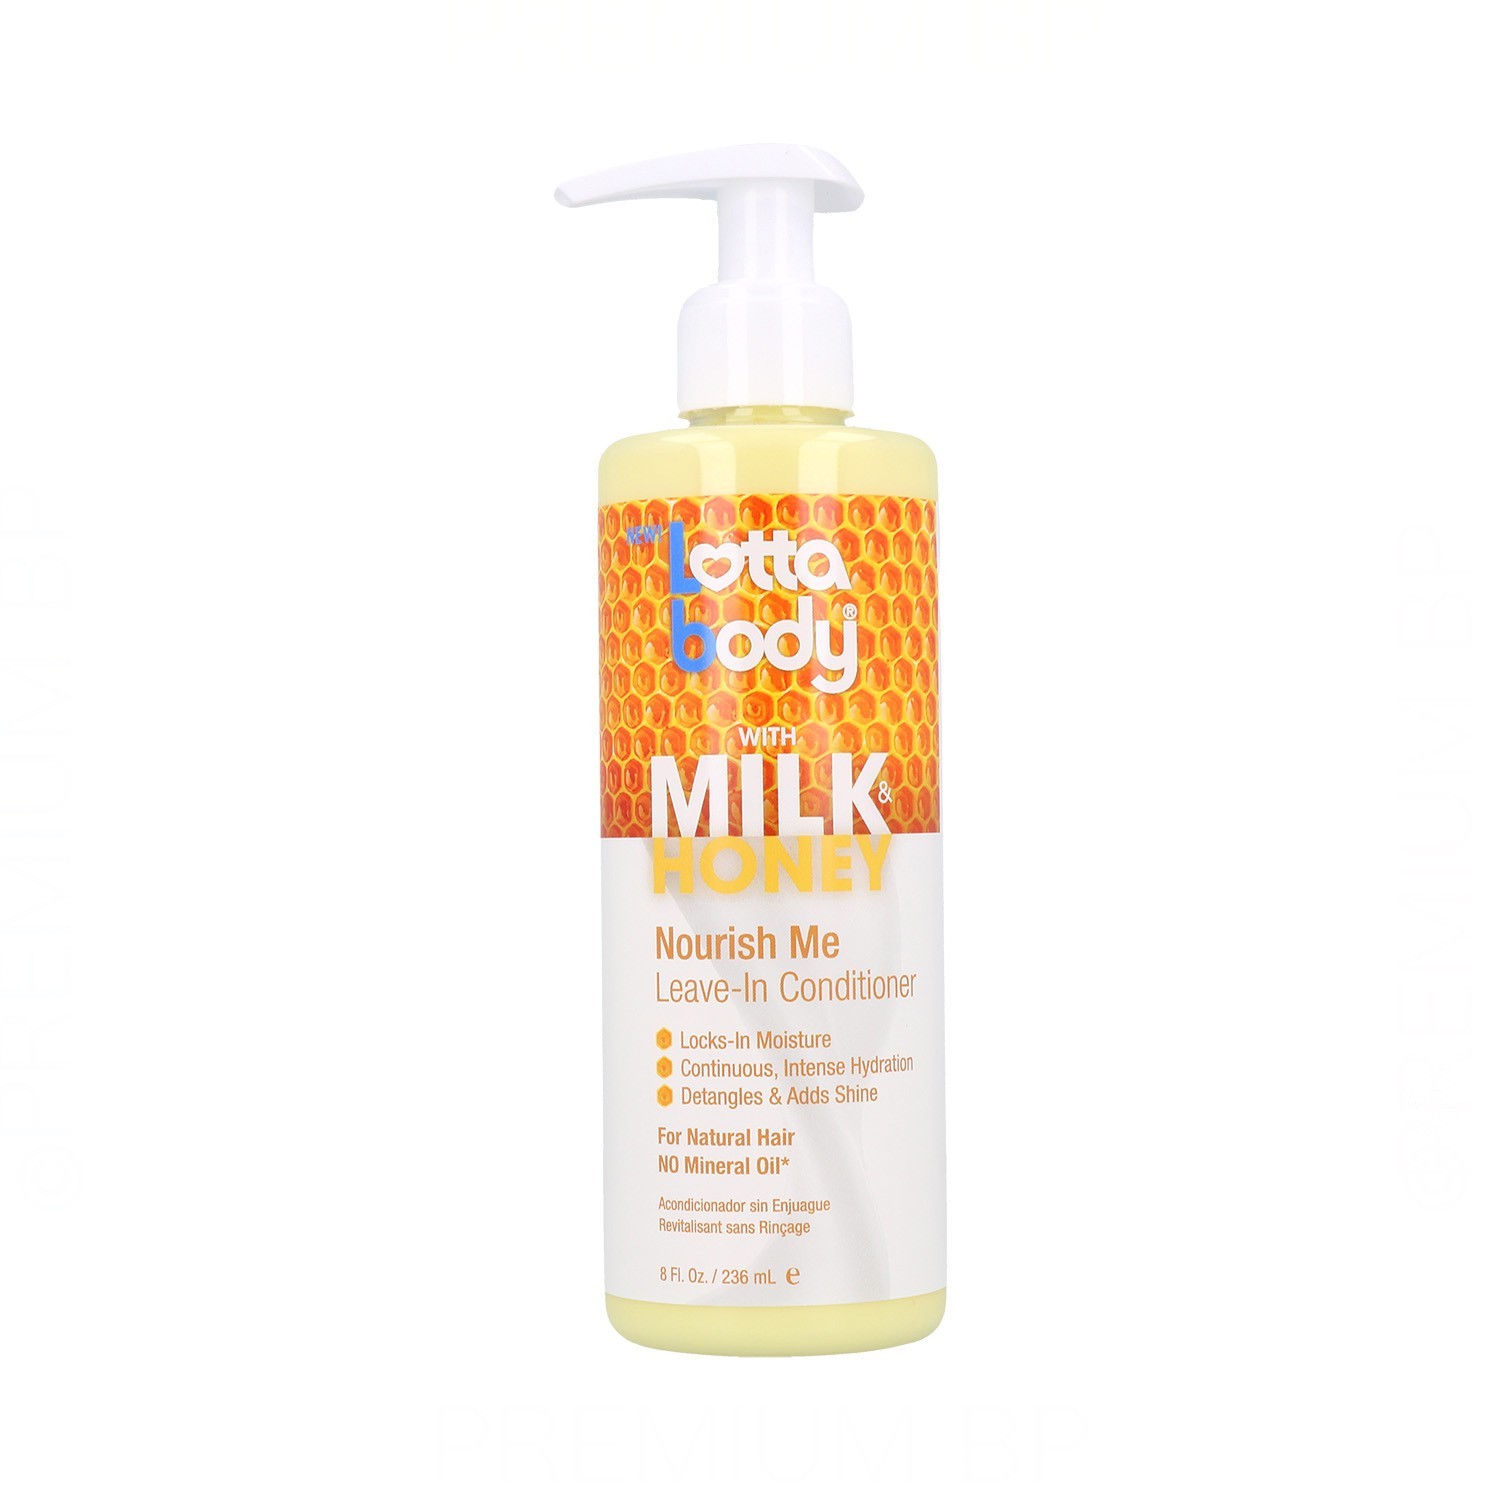 Lottabody Milk & Honey Leave-In Condizionatore 236 ml (Nourish Me)